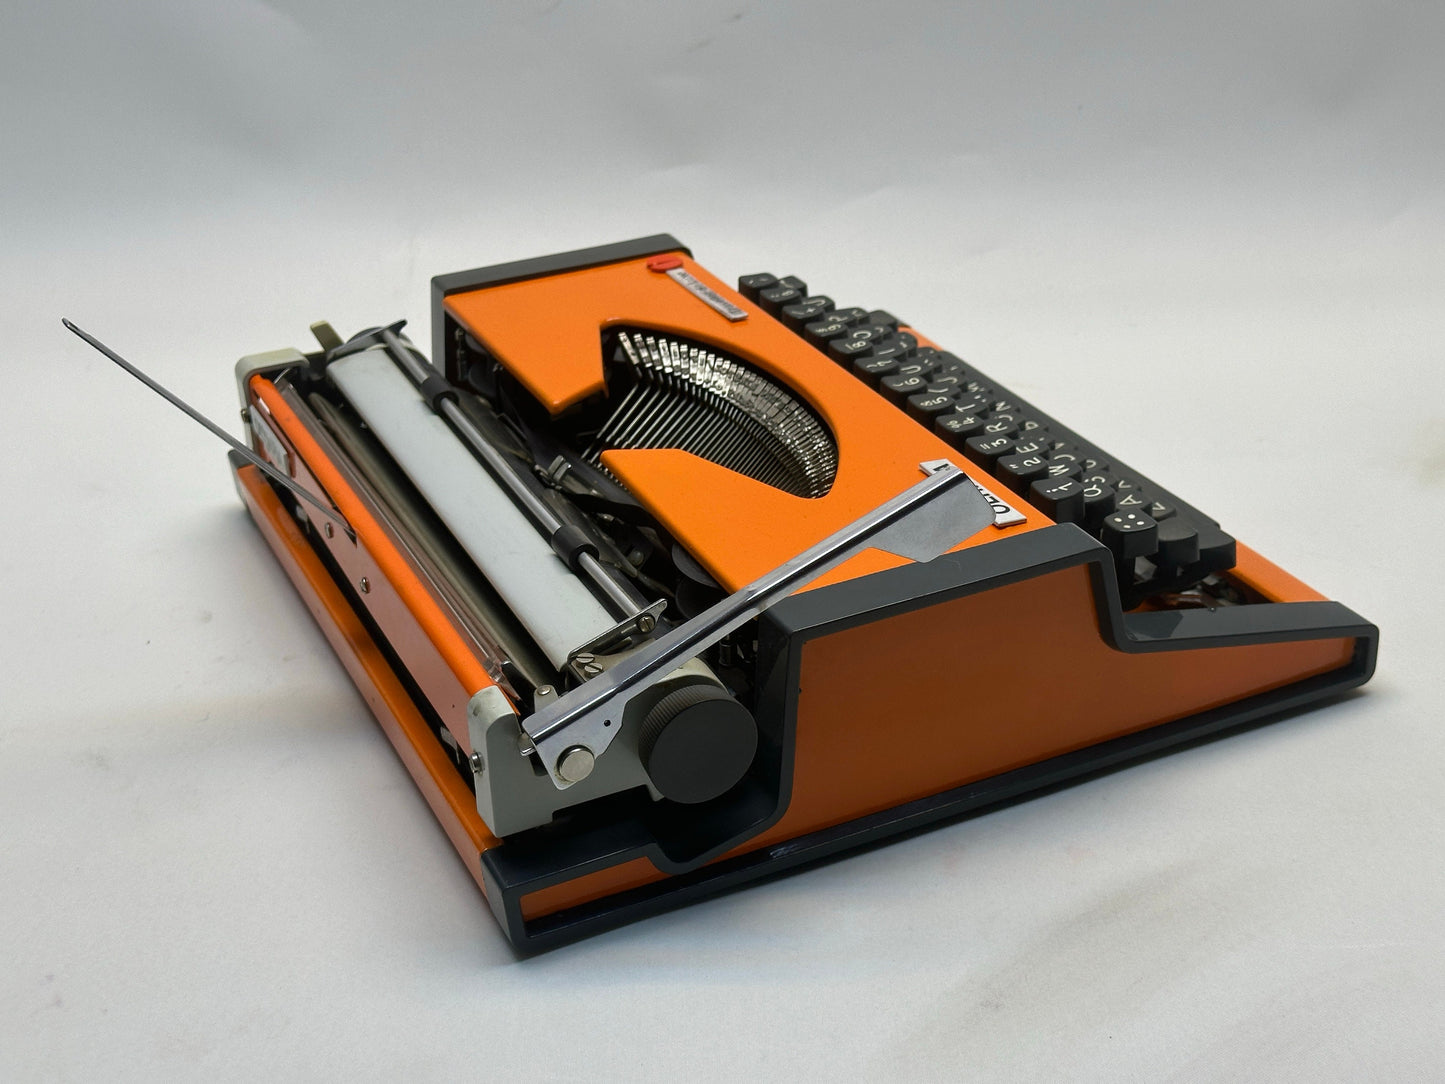 Olympia Orange Typewriter - Vibrant Typing Experience with Matching Orange Bag, 1960 Model, QWERTY Layout - An Antique Typewriter Gem